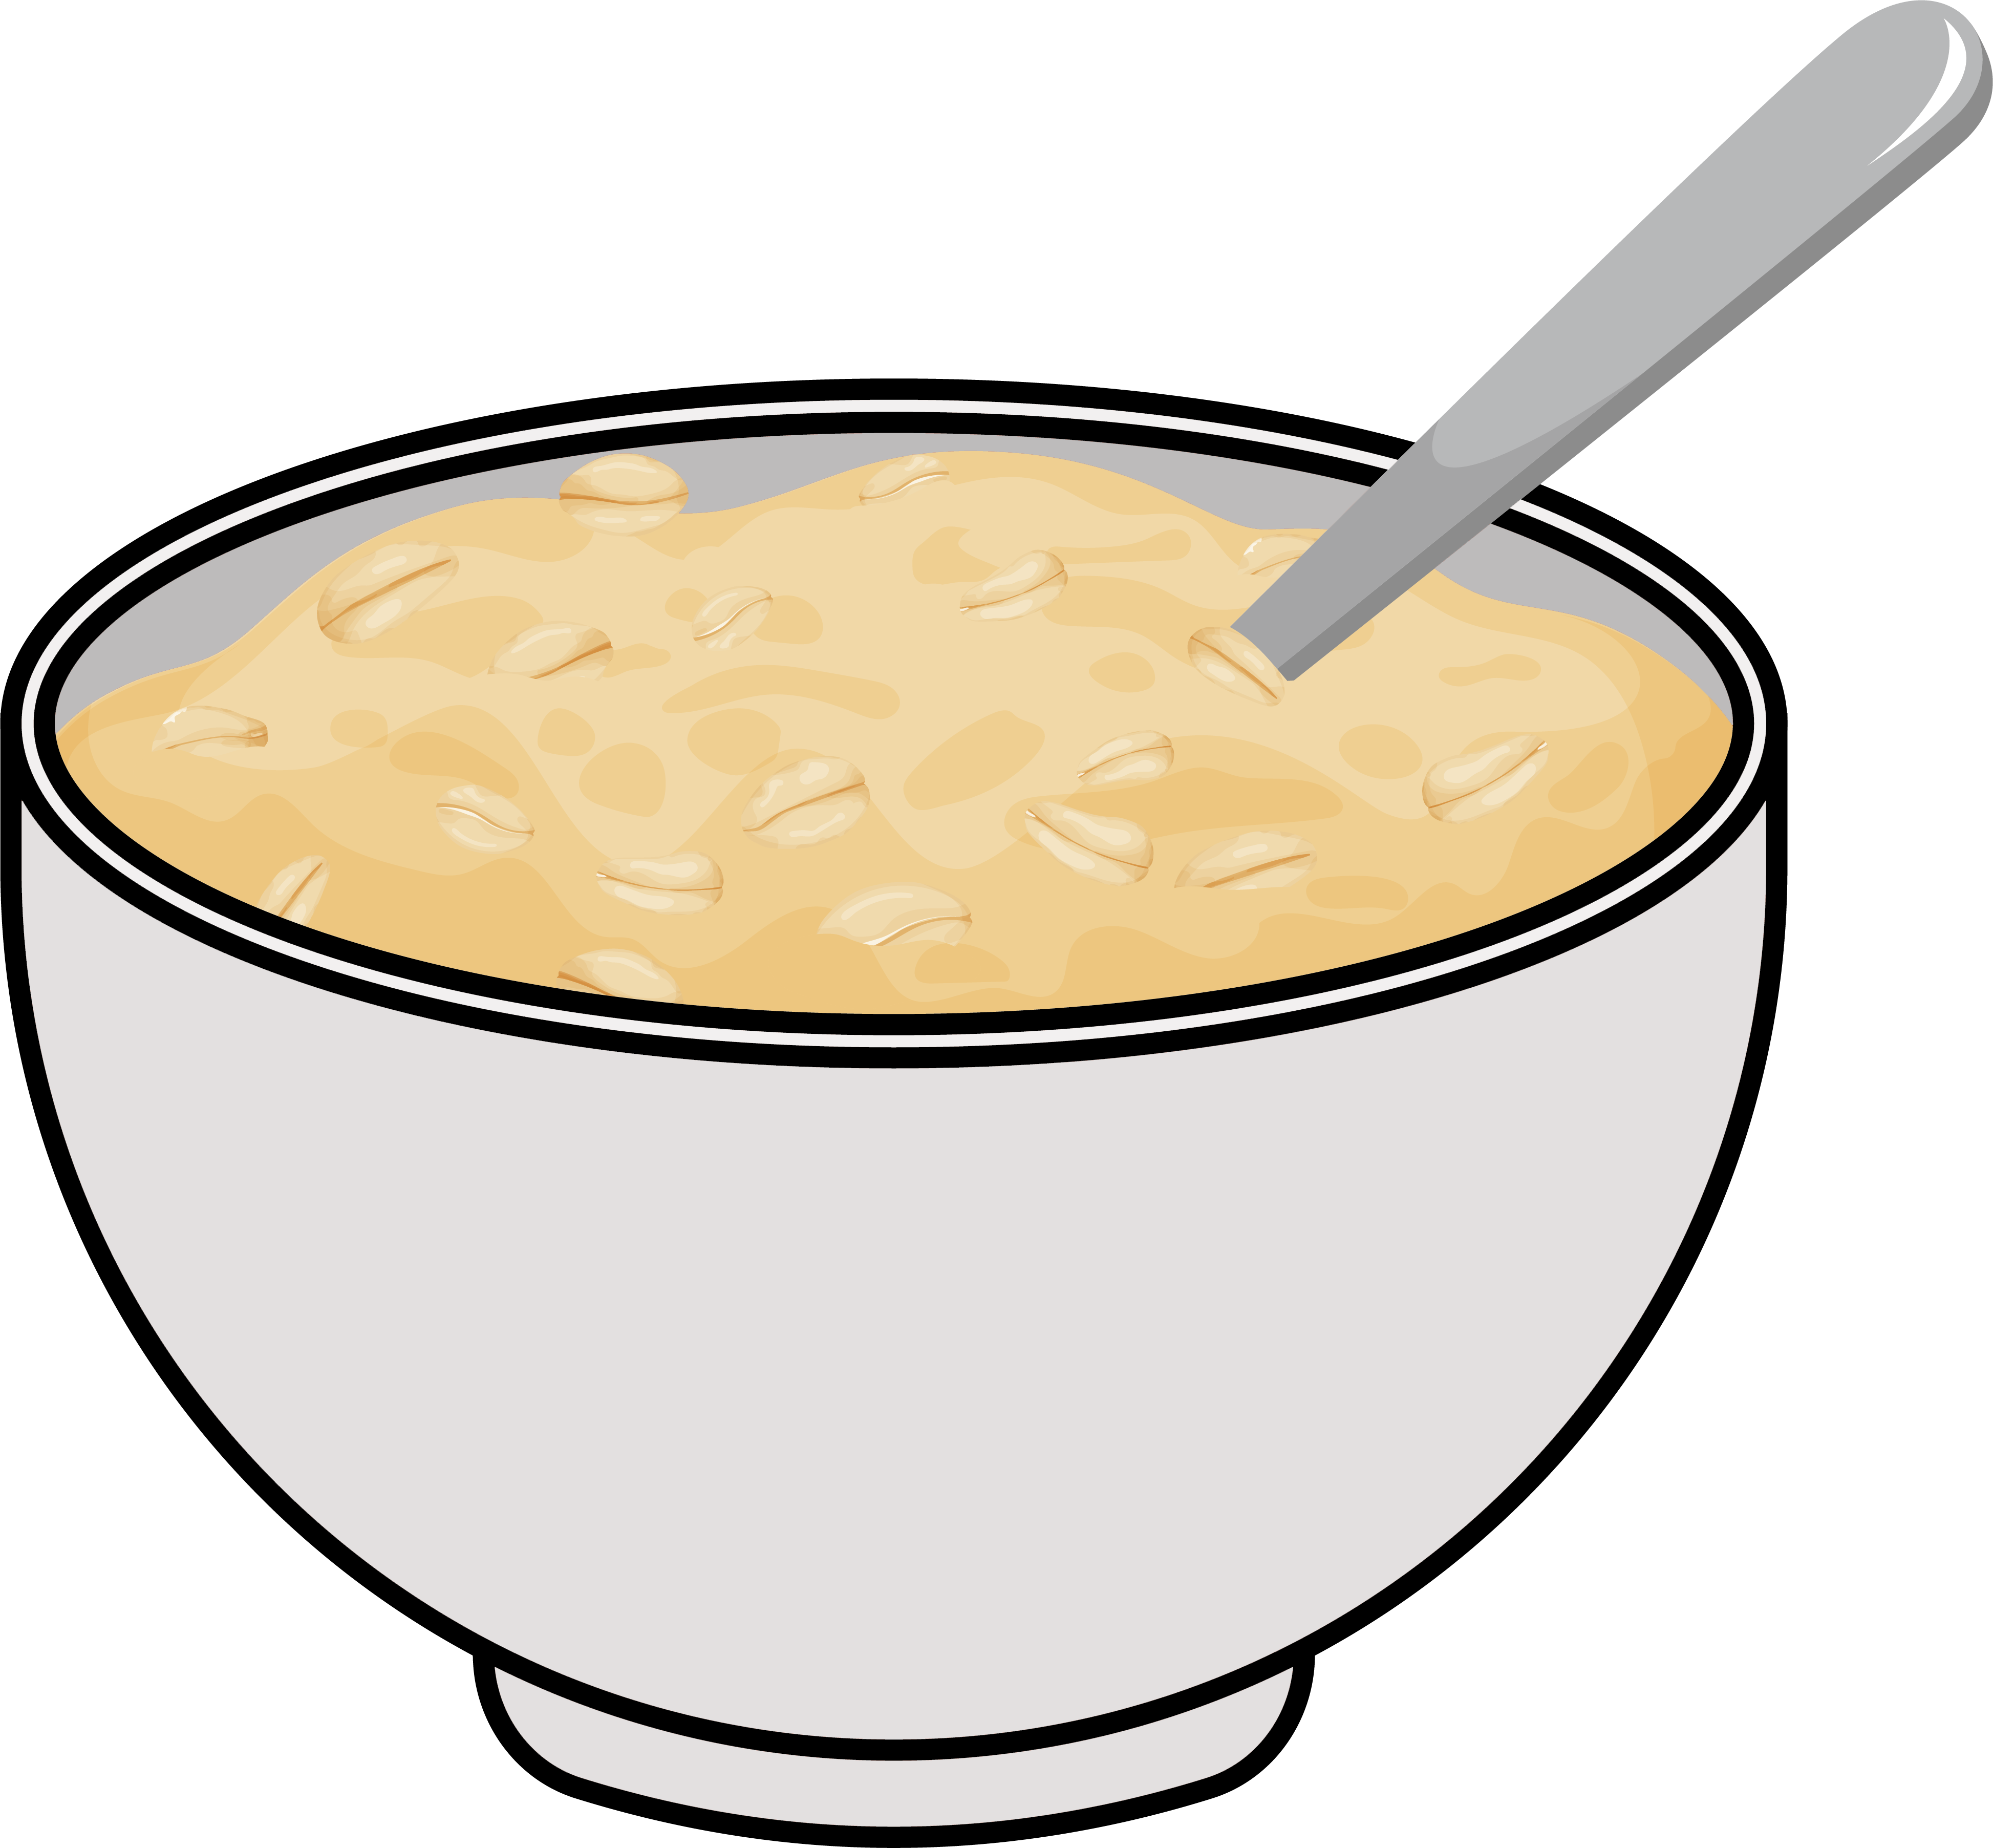 Bowl of porridge